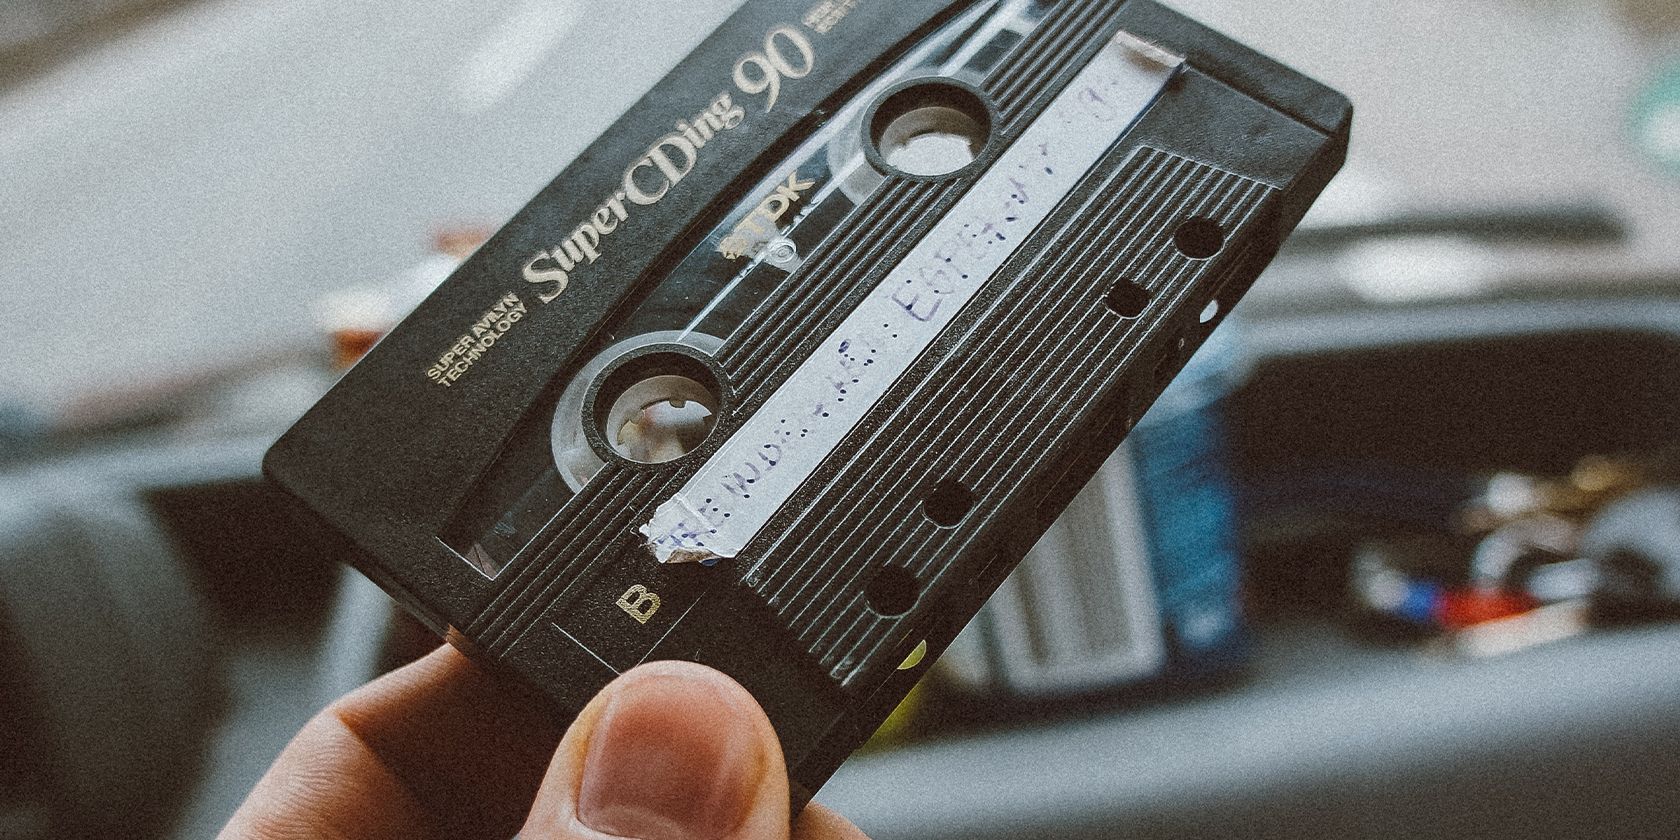 cassette tape held in a car